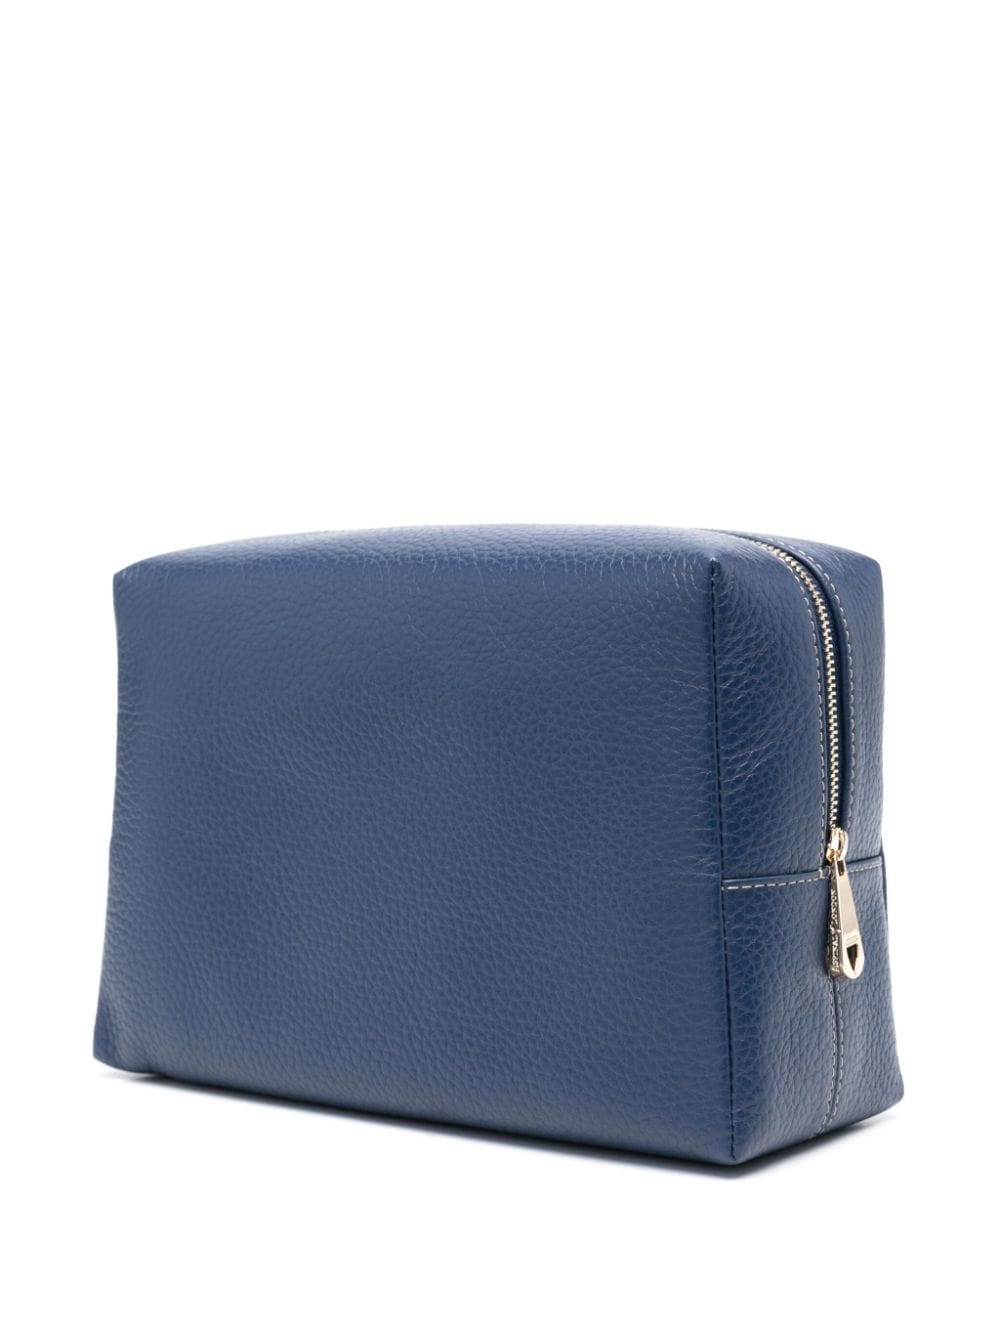 Aspinal Of London medium London leather make up bag - Blauw